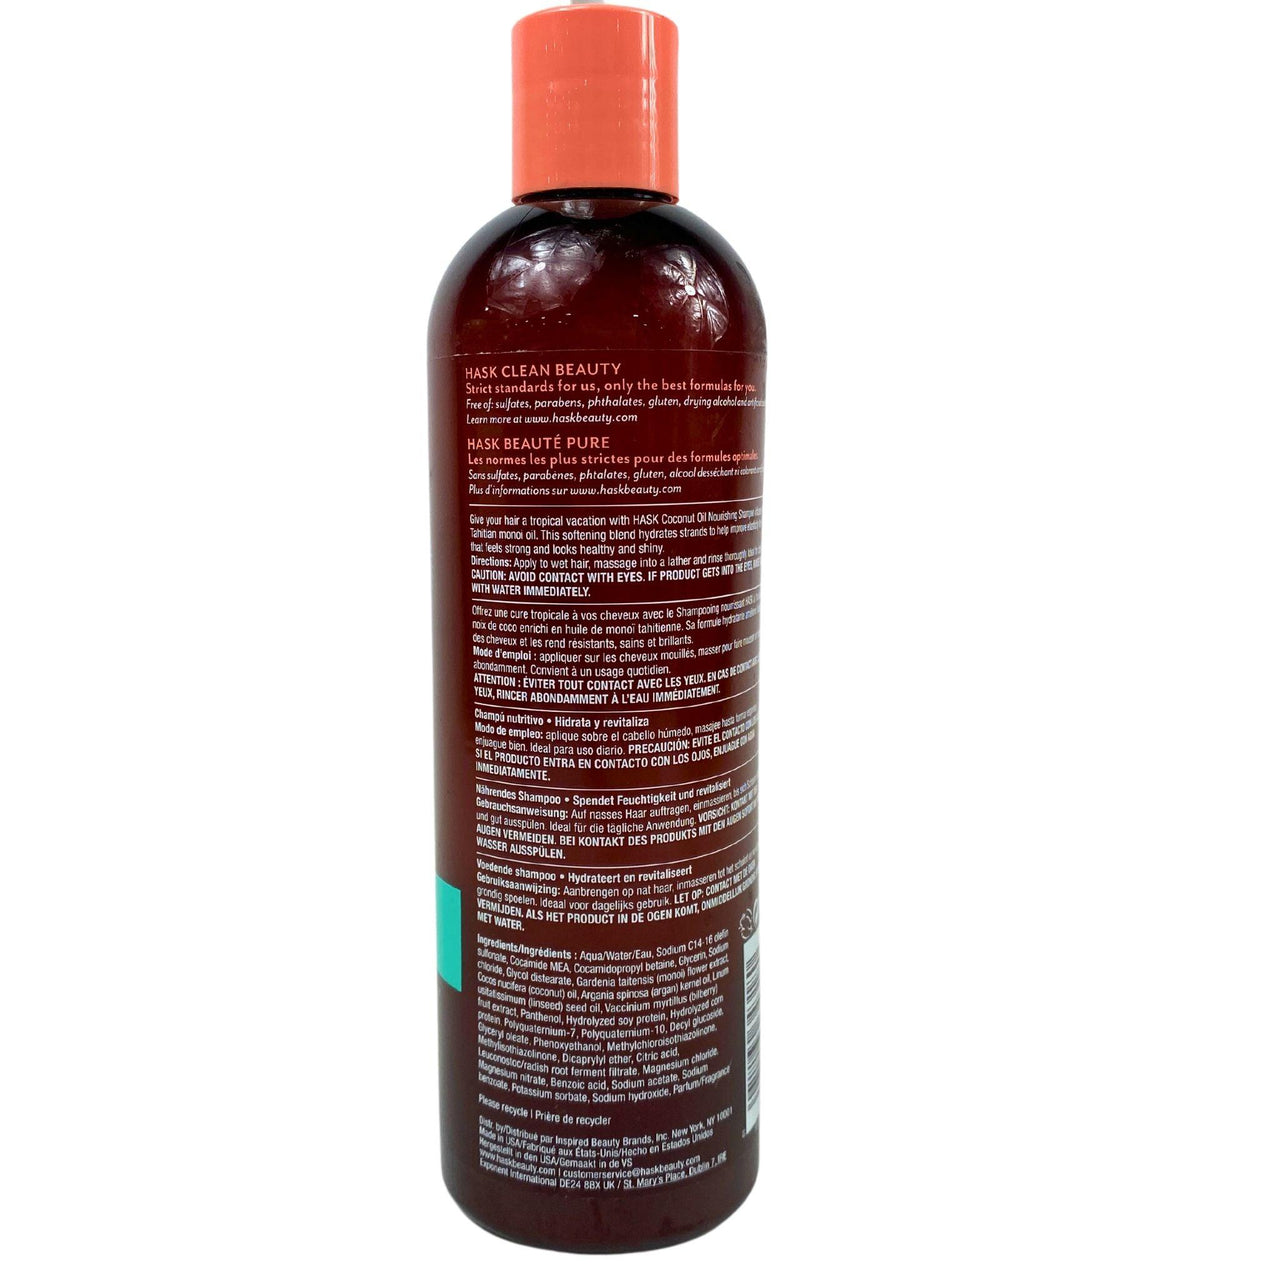 HASK Monoi Coconut Oil Nourishing Shampoo 12OZ (50 Pcs lot) - Discount Wholesalers Inc